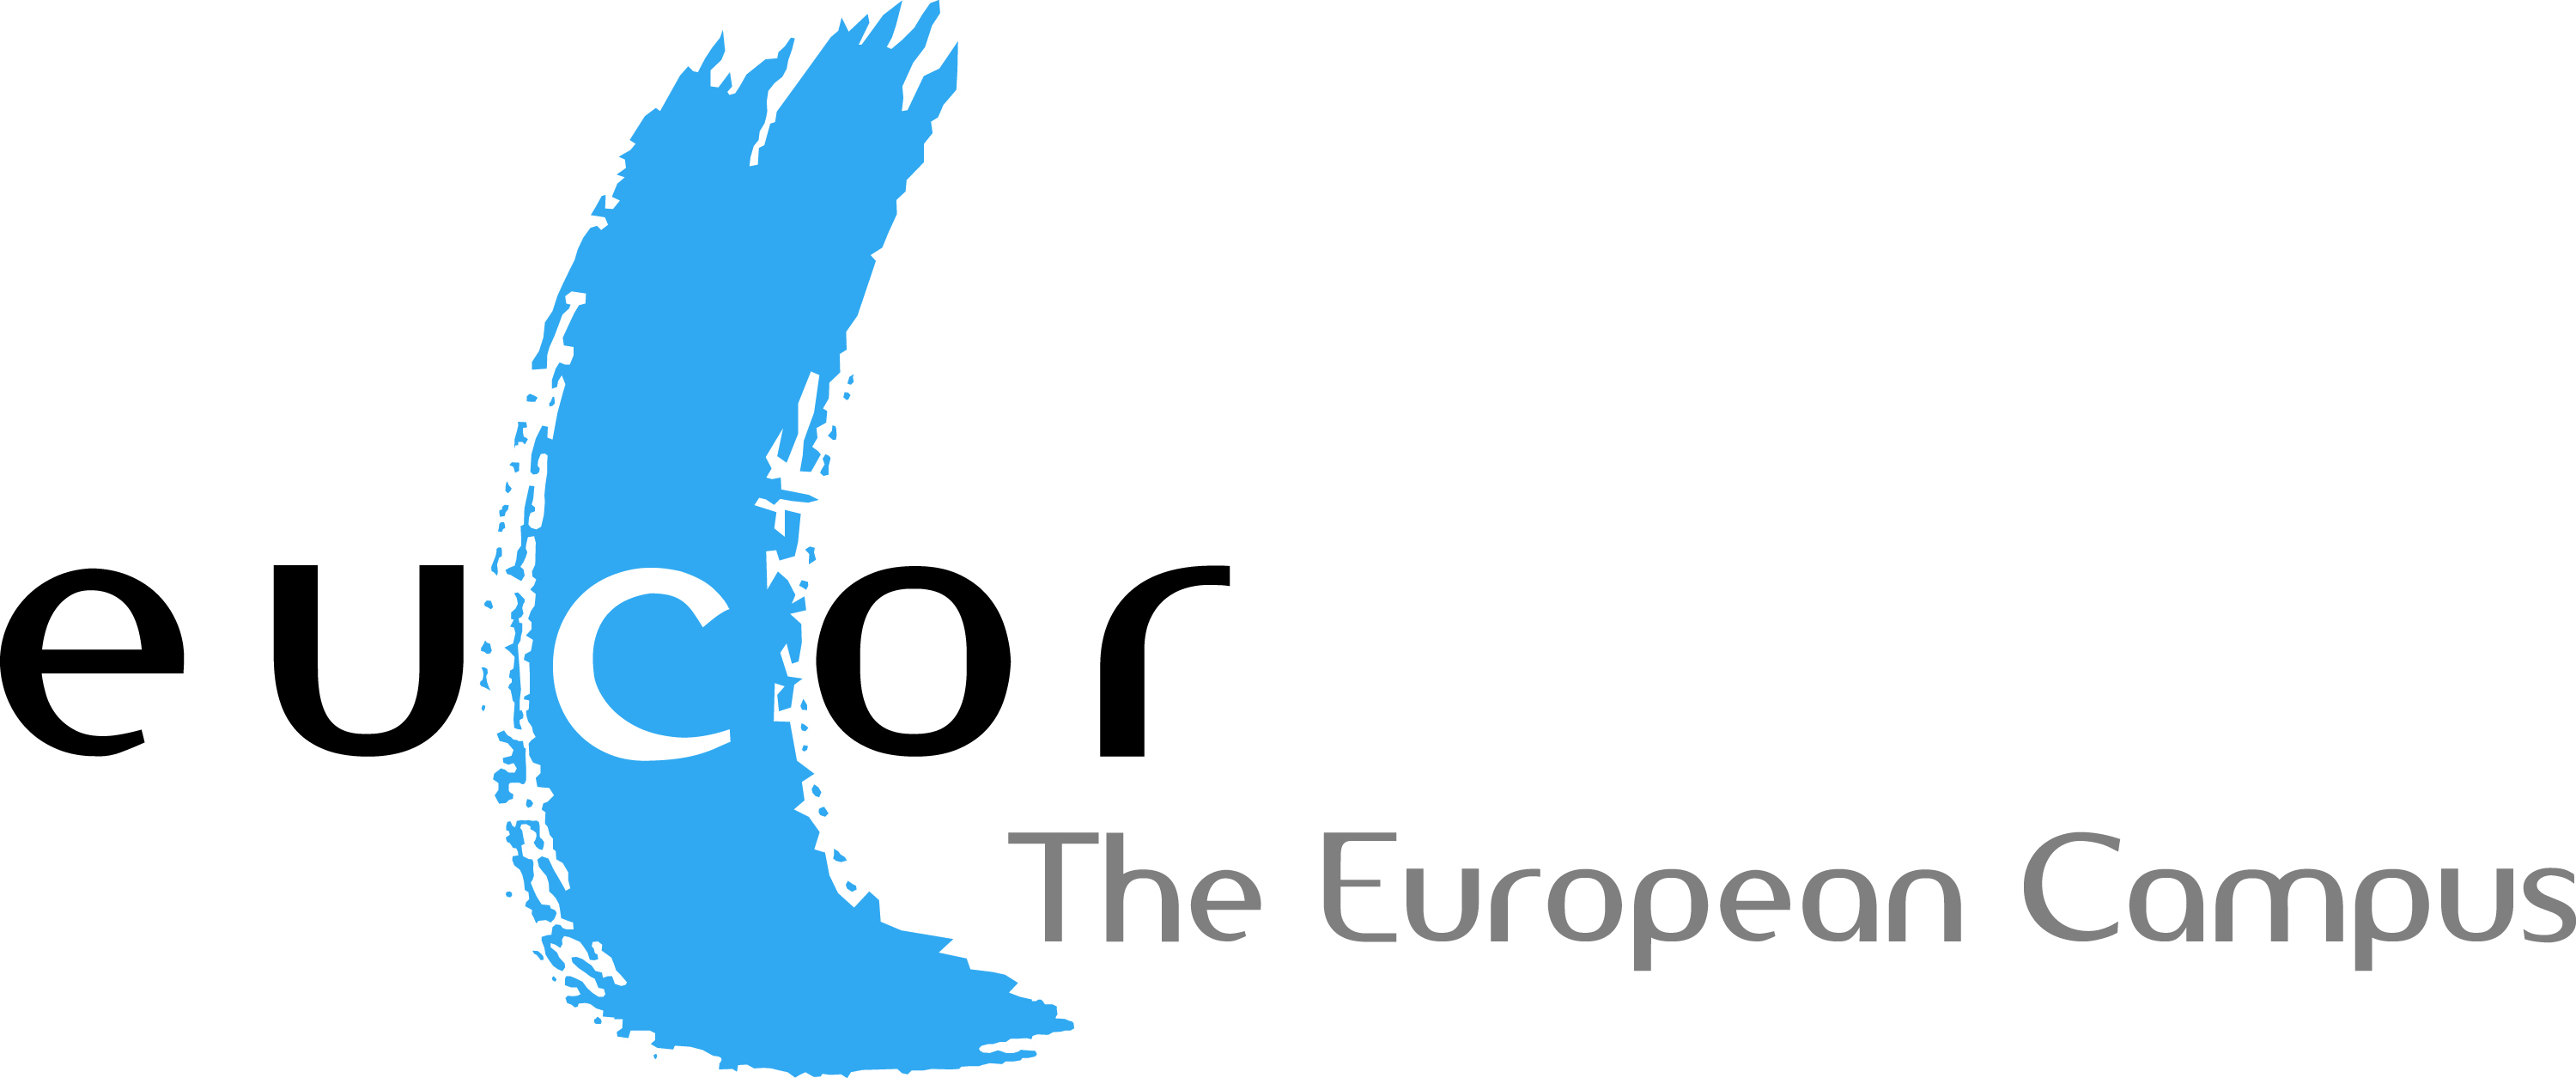 EUCOR_logo